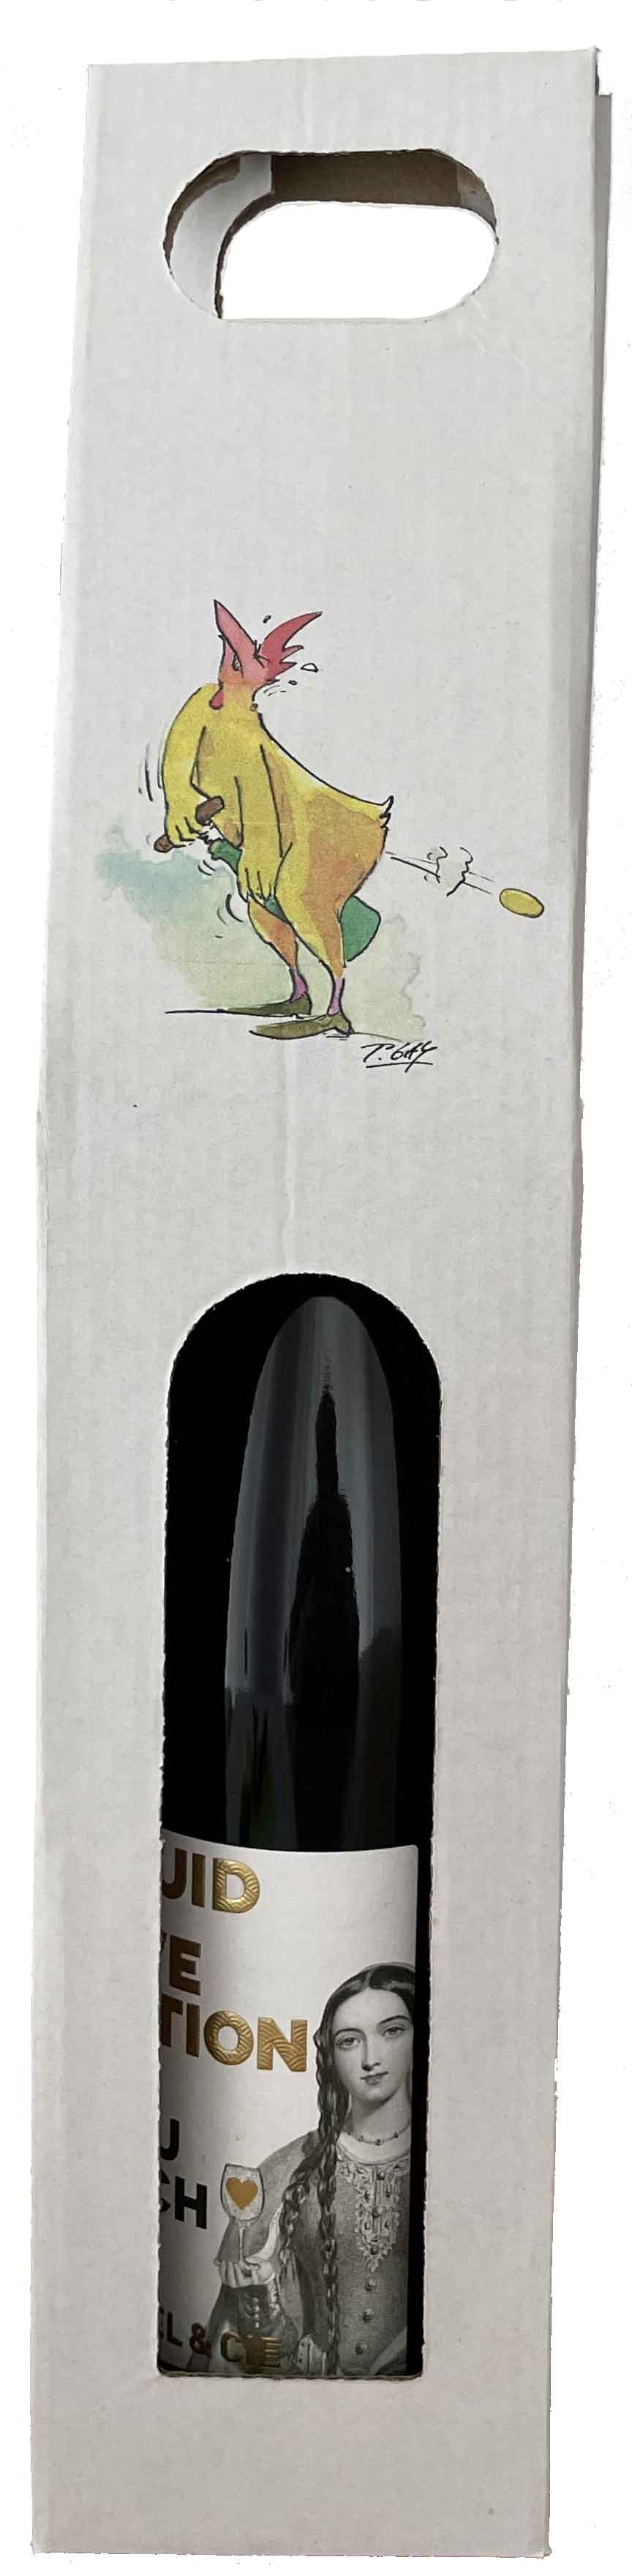 Peter Gaymann Weinverpackung 1 Flasche Motiv Korkenzieher